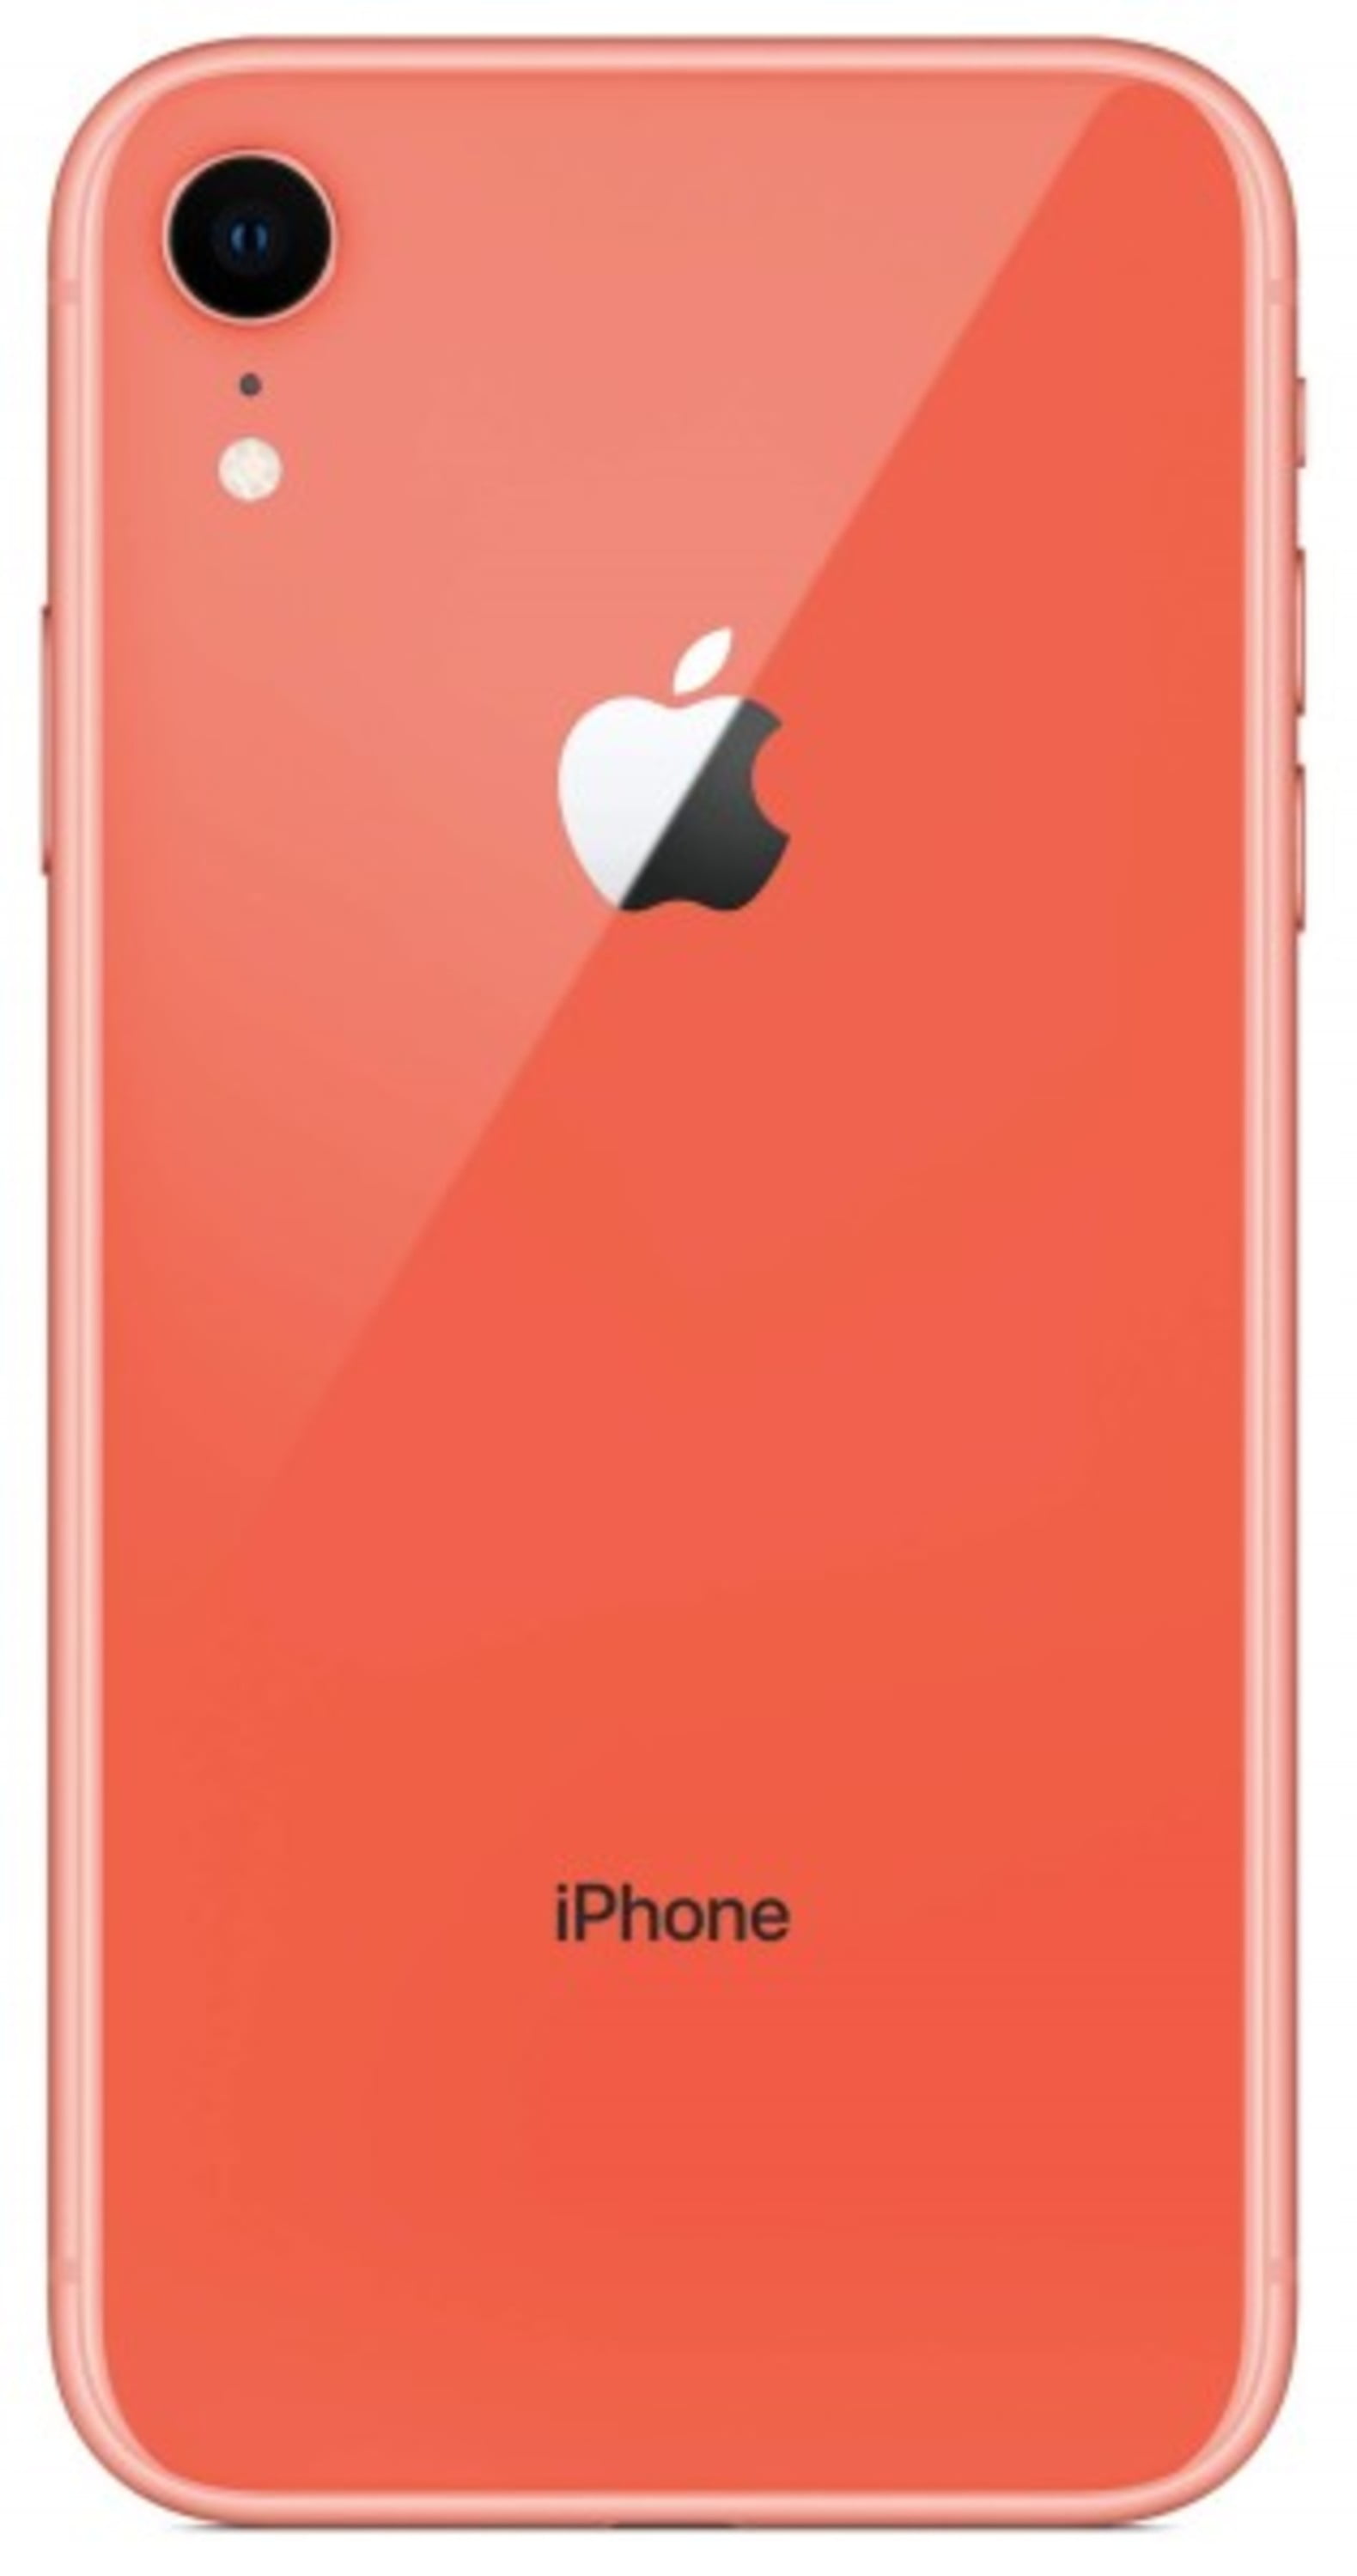 Apple iPhone XR 64GB Fully Unlocked (Verizon + Sprint + GSM 